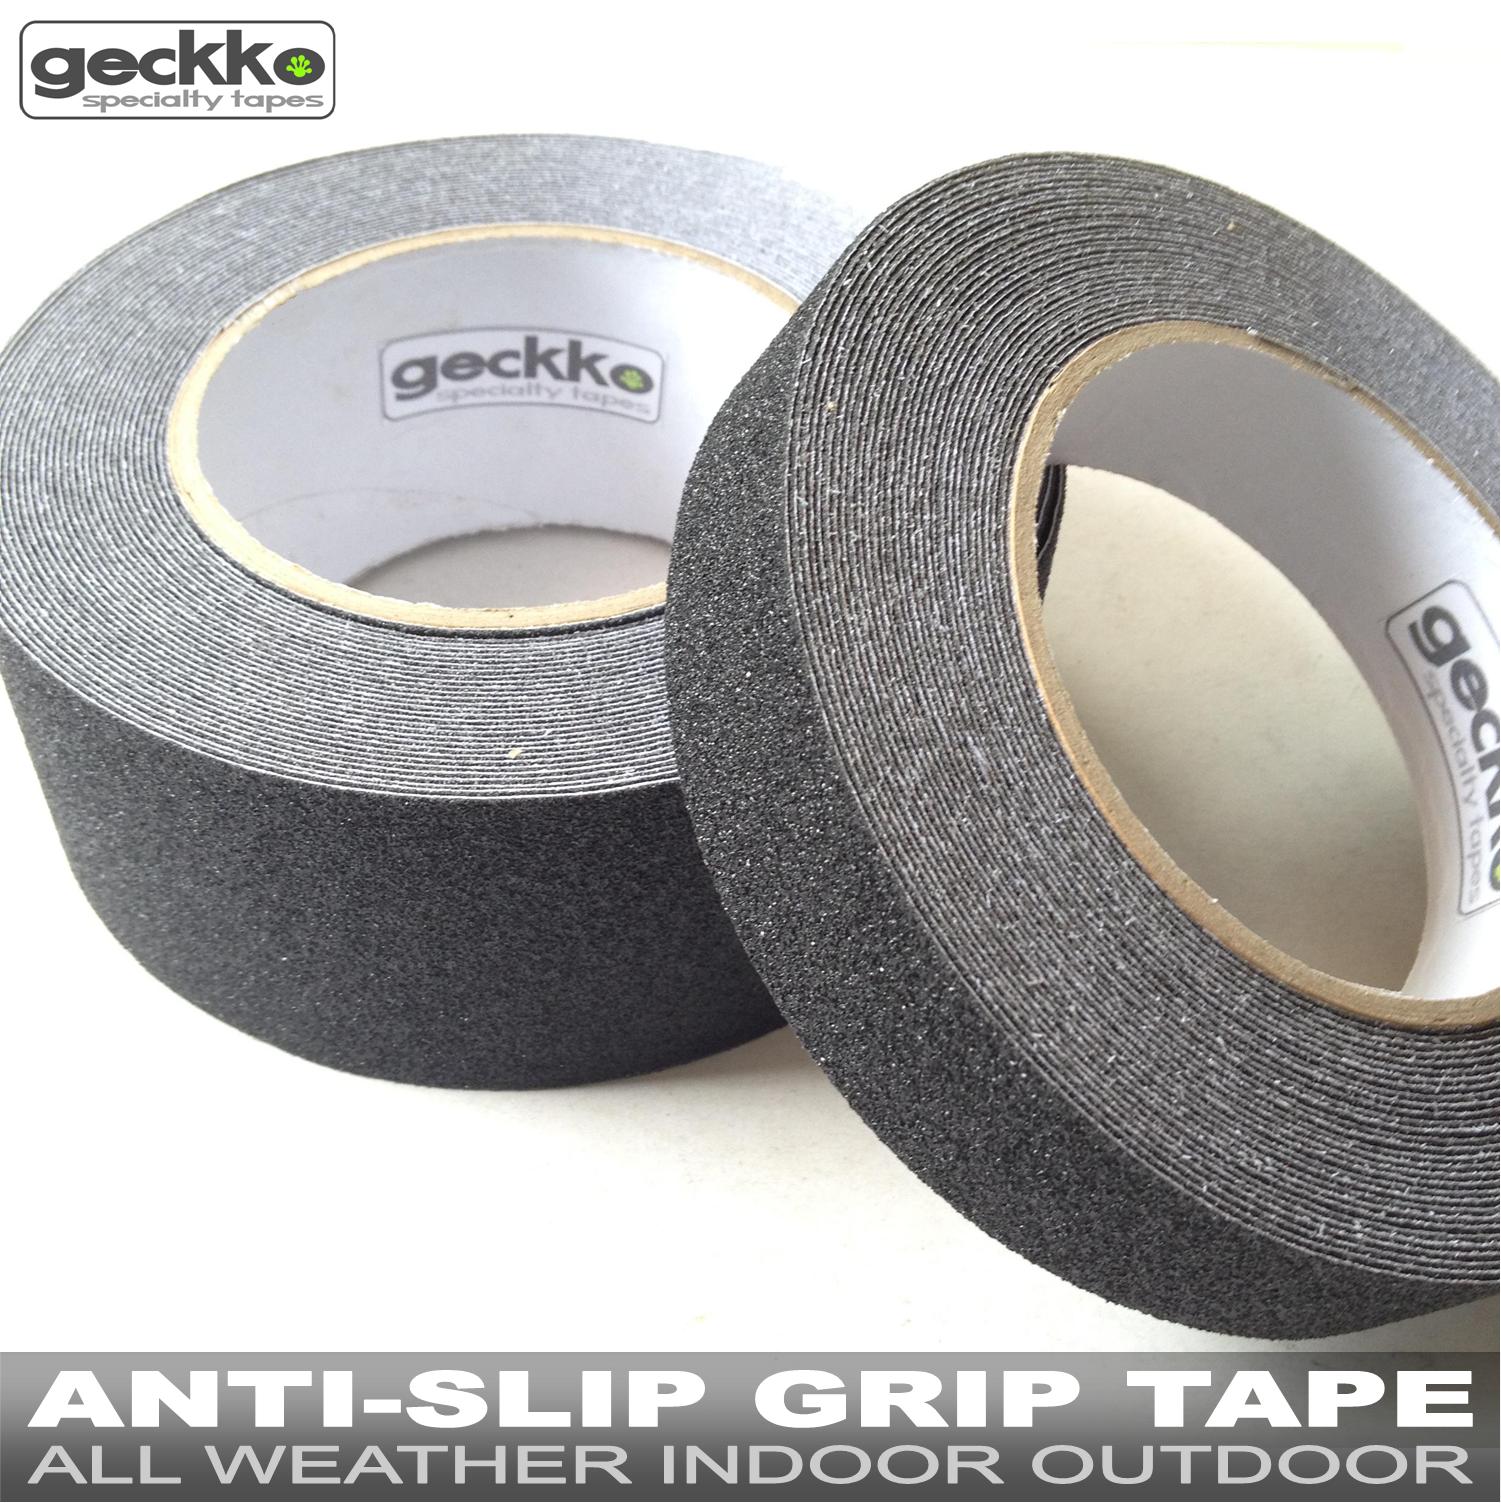 Anti Slip Grip Tape 2 Inch Geckko Specialty Tapes 1pc Non Skid